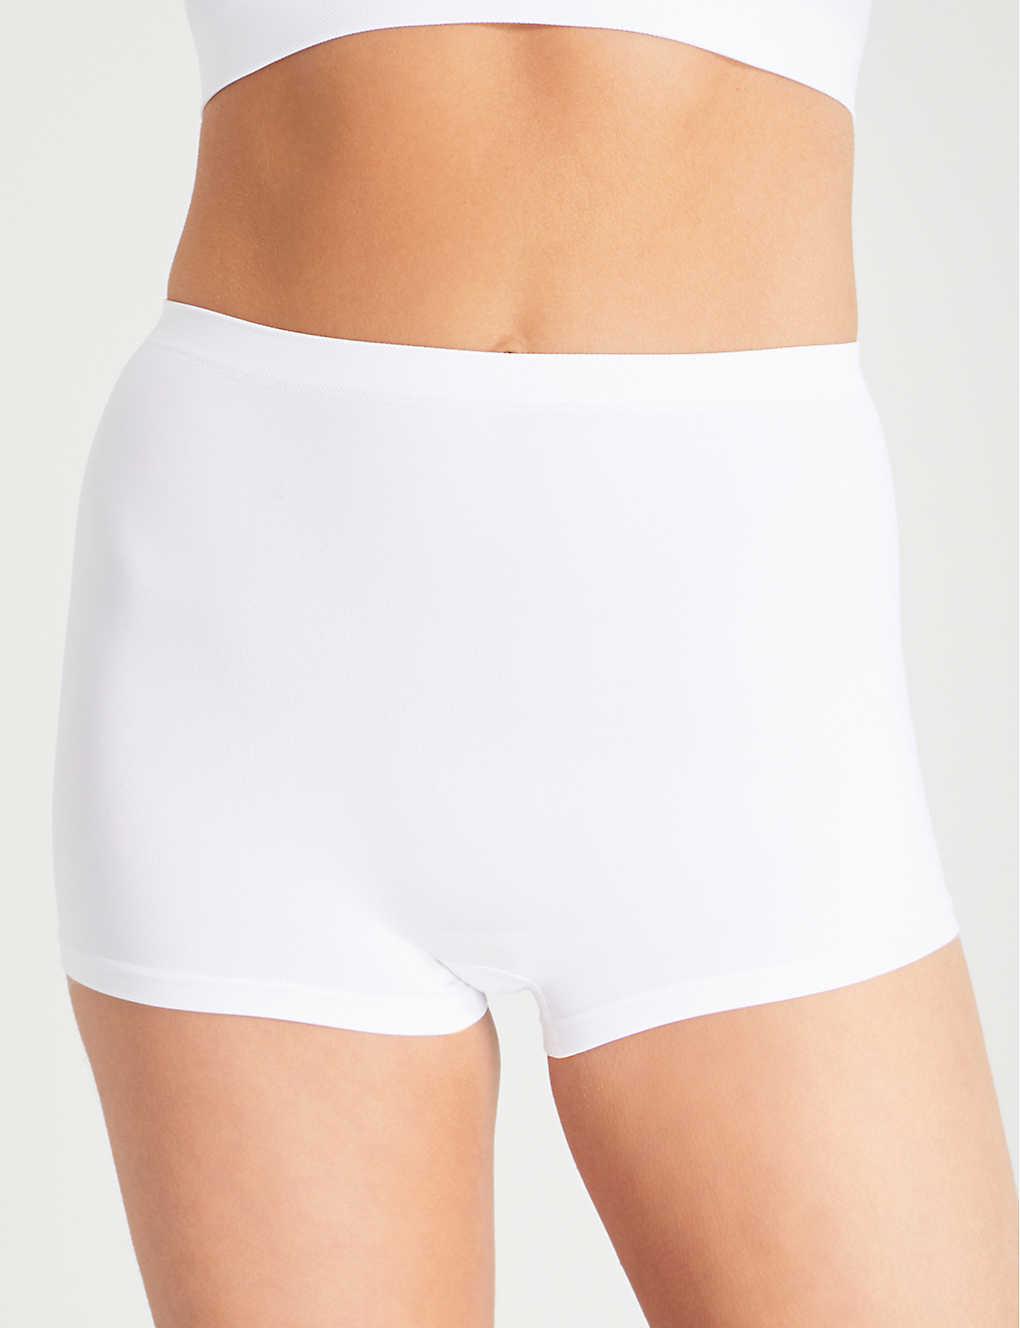 Hanro Cotton Touch Feeling Microfiber Boy Shorts in White (Black) - Lyst